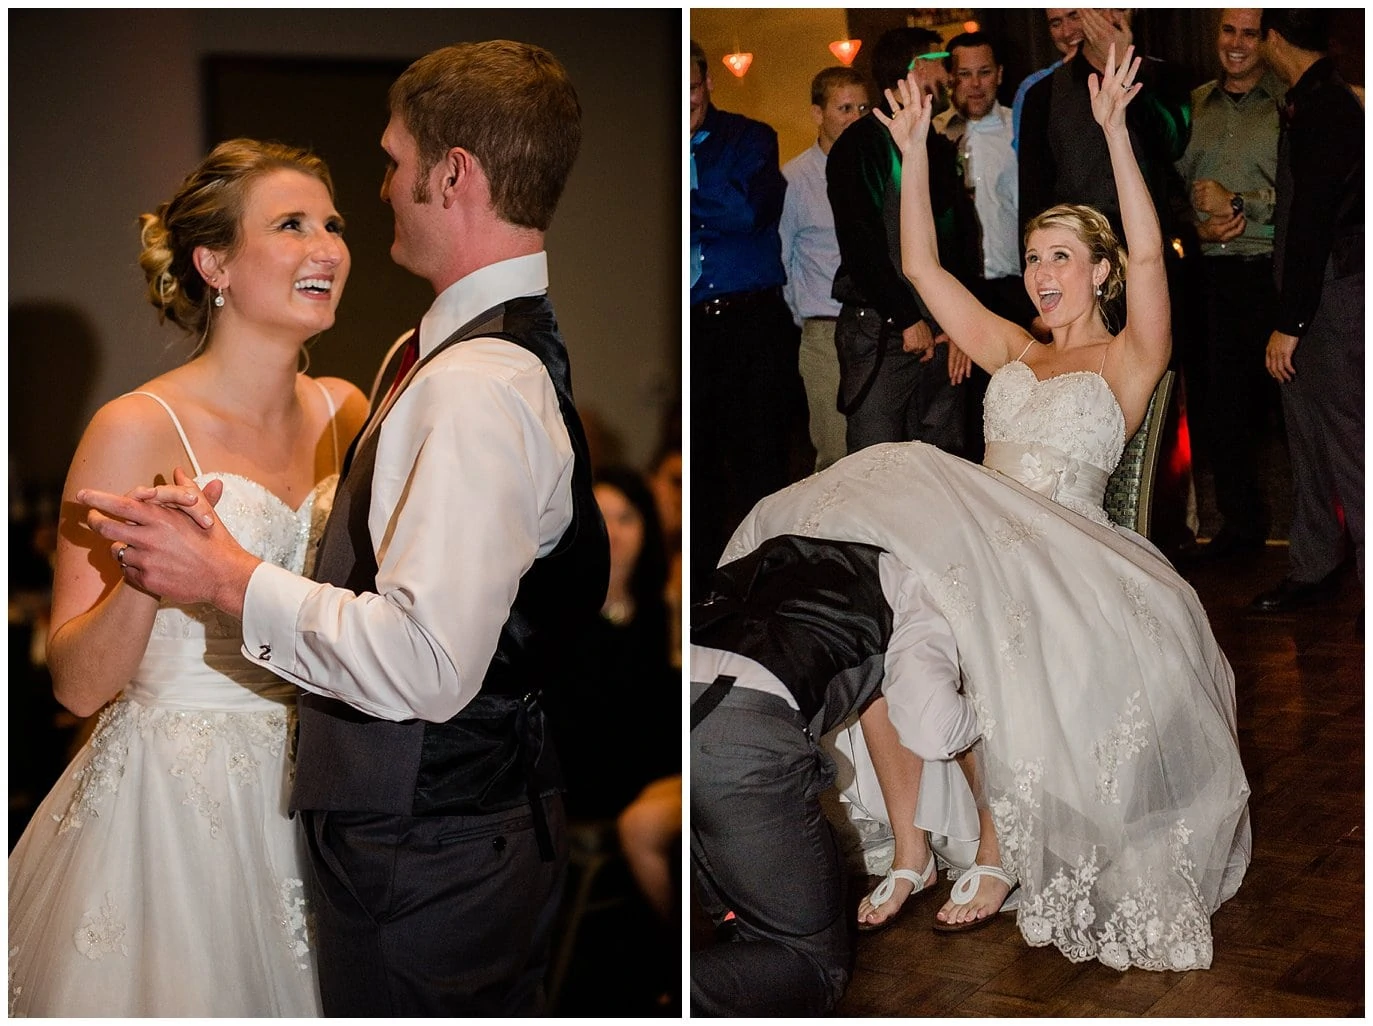 first dance and garter toss at Denver Magnolia Hotel wedding reception by Denver wedding photographer Jennie Crate